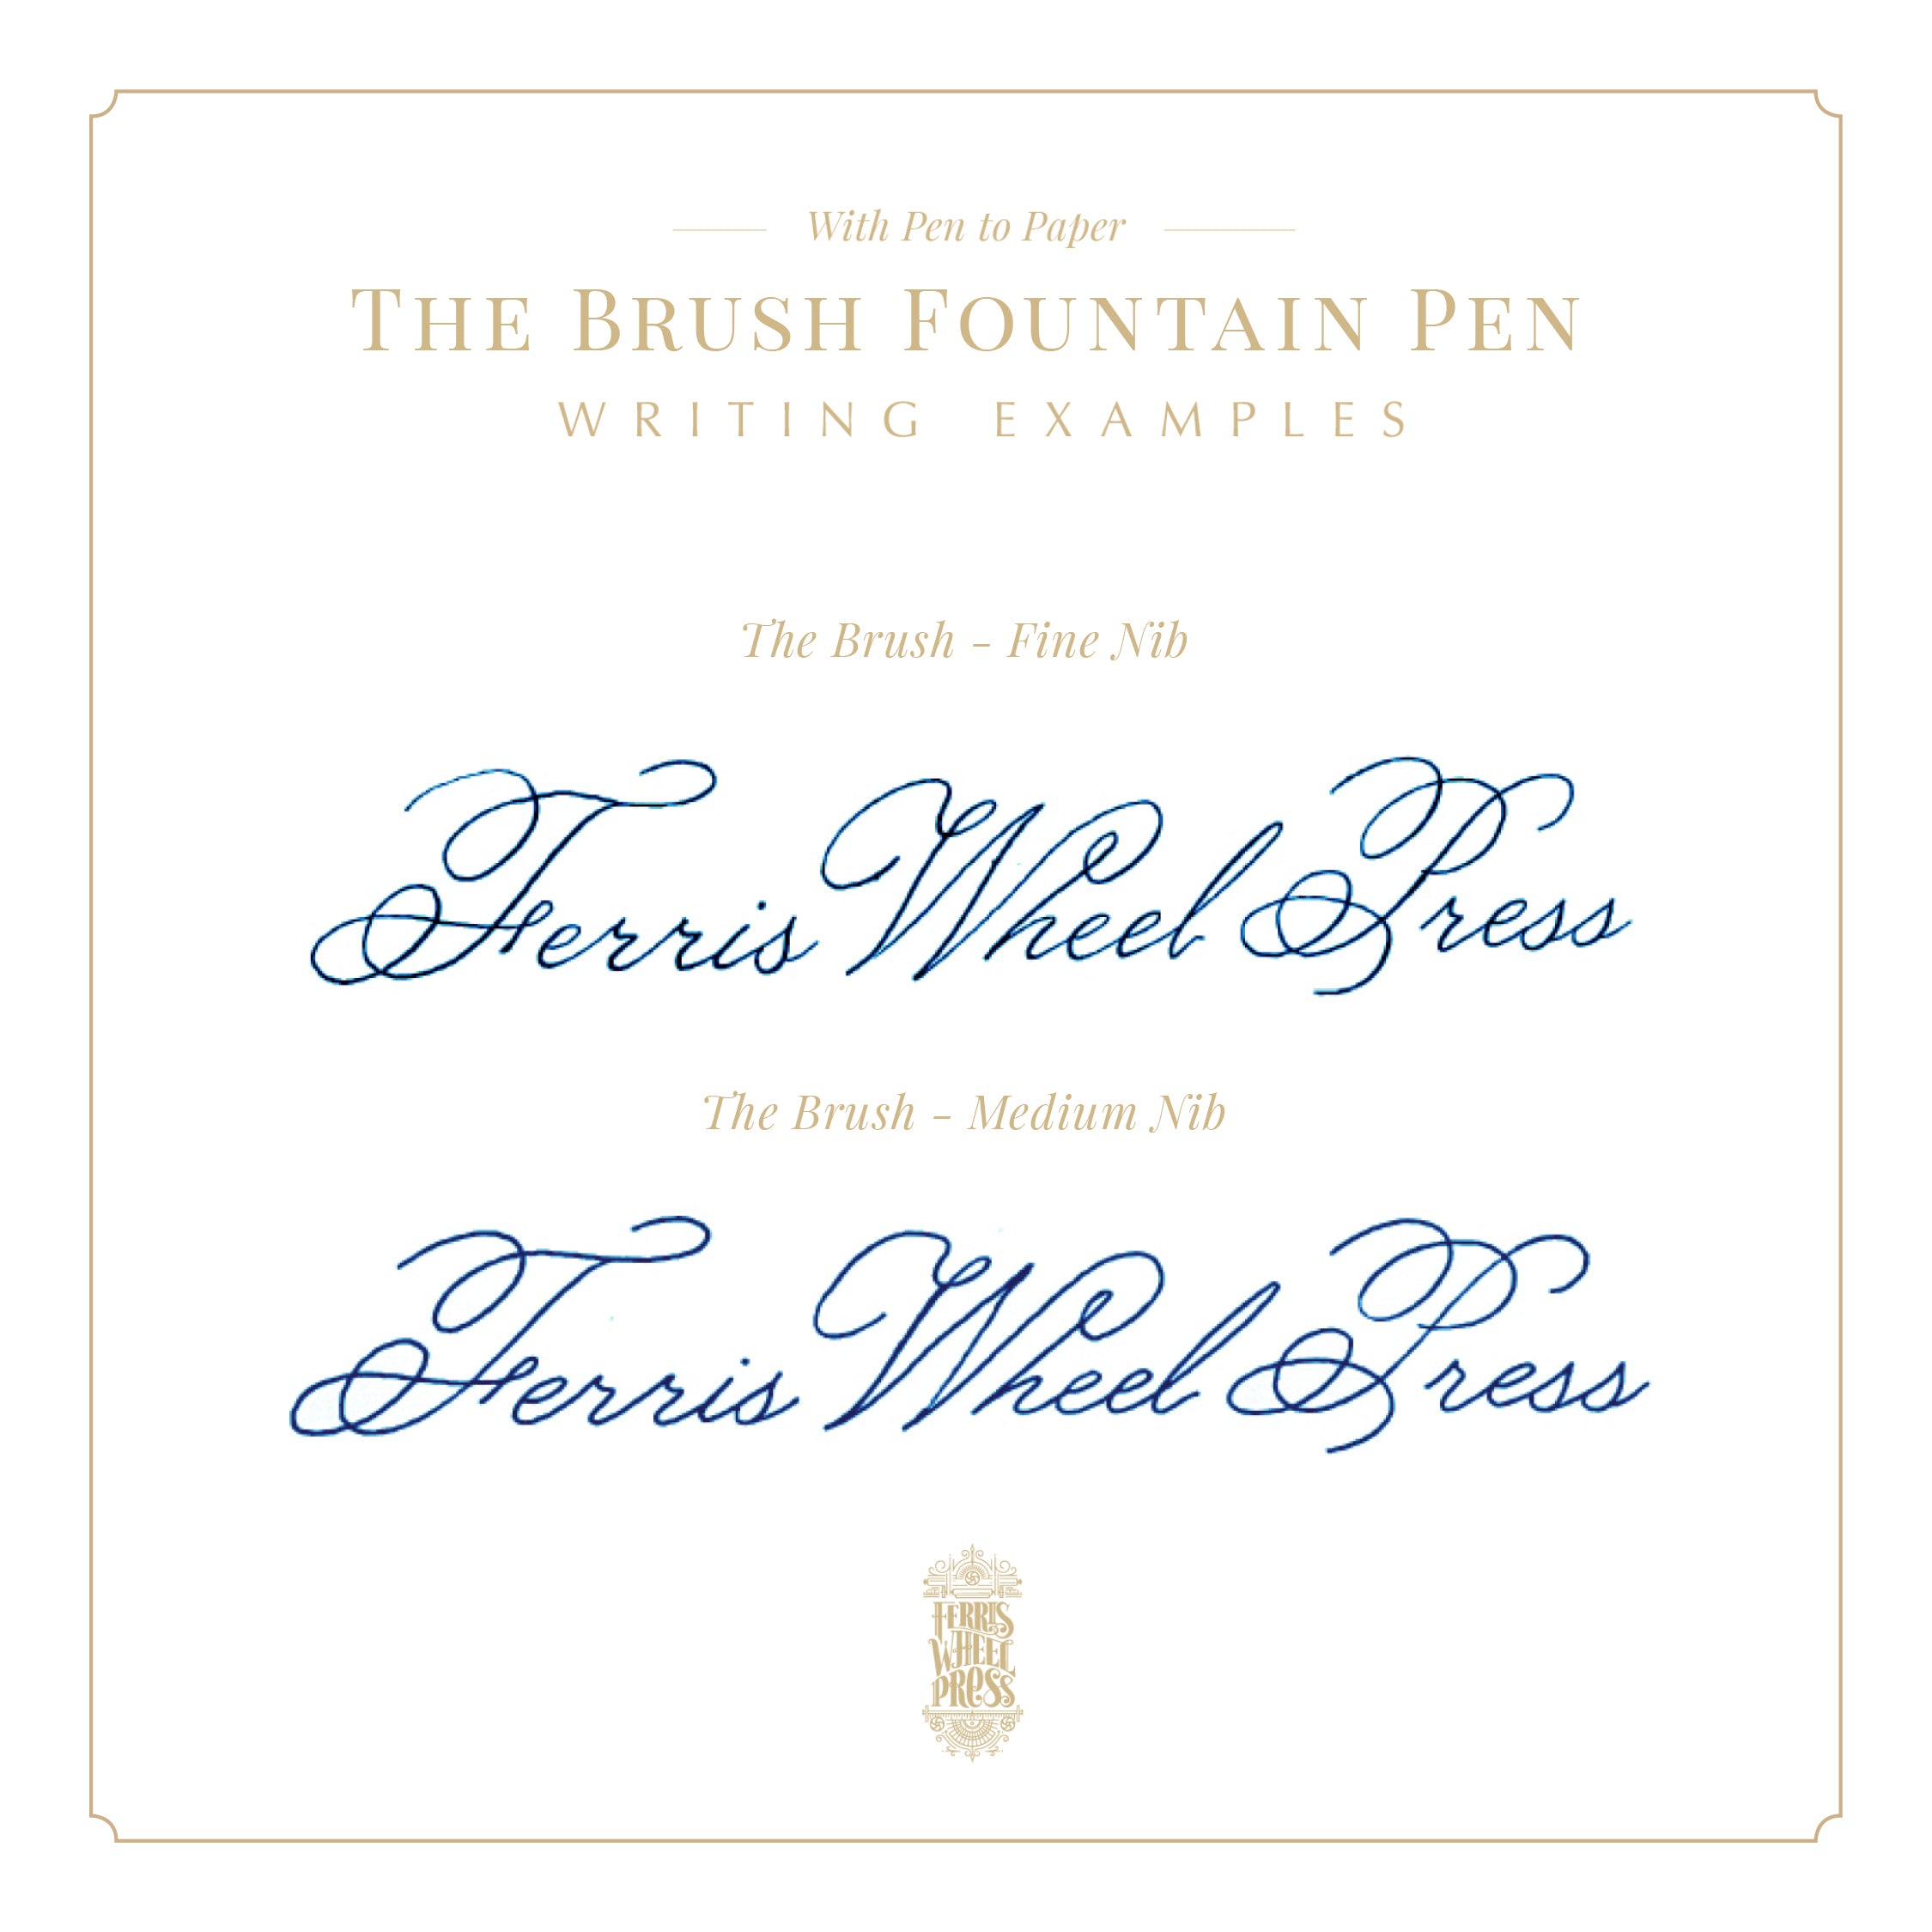 Persimmon Brush Fountain Pen